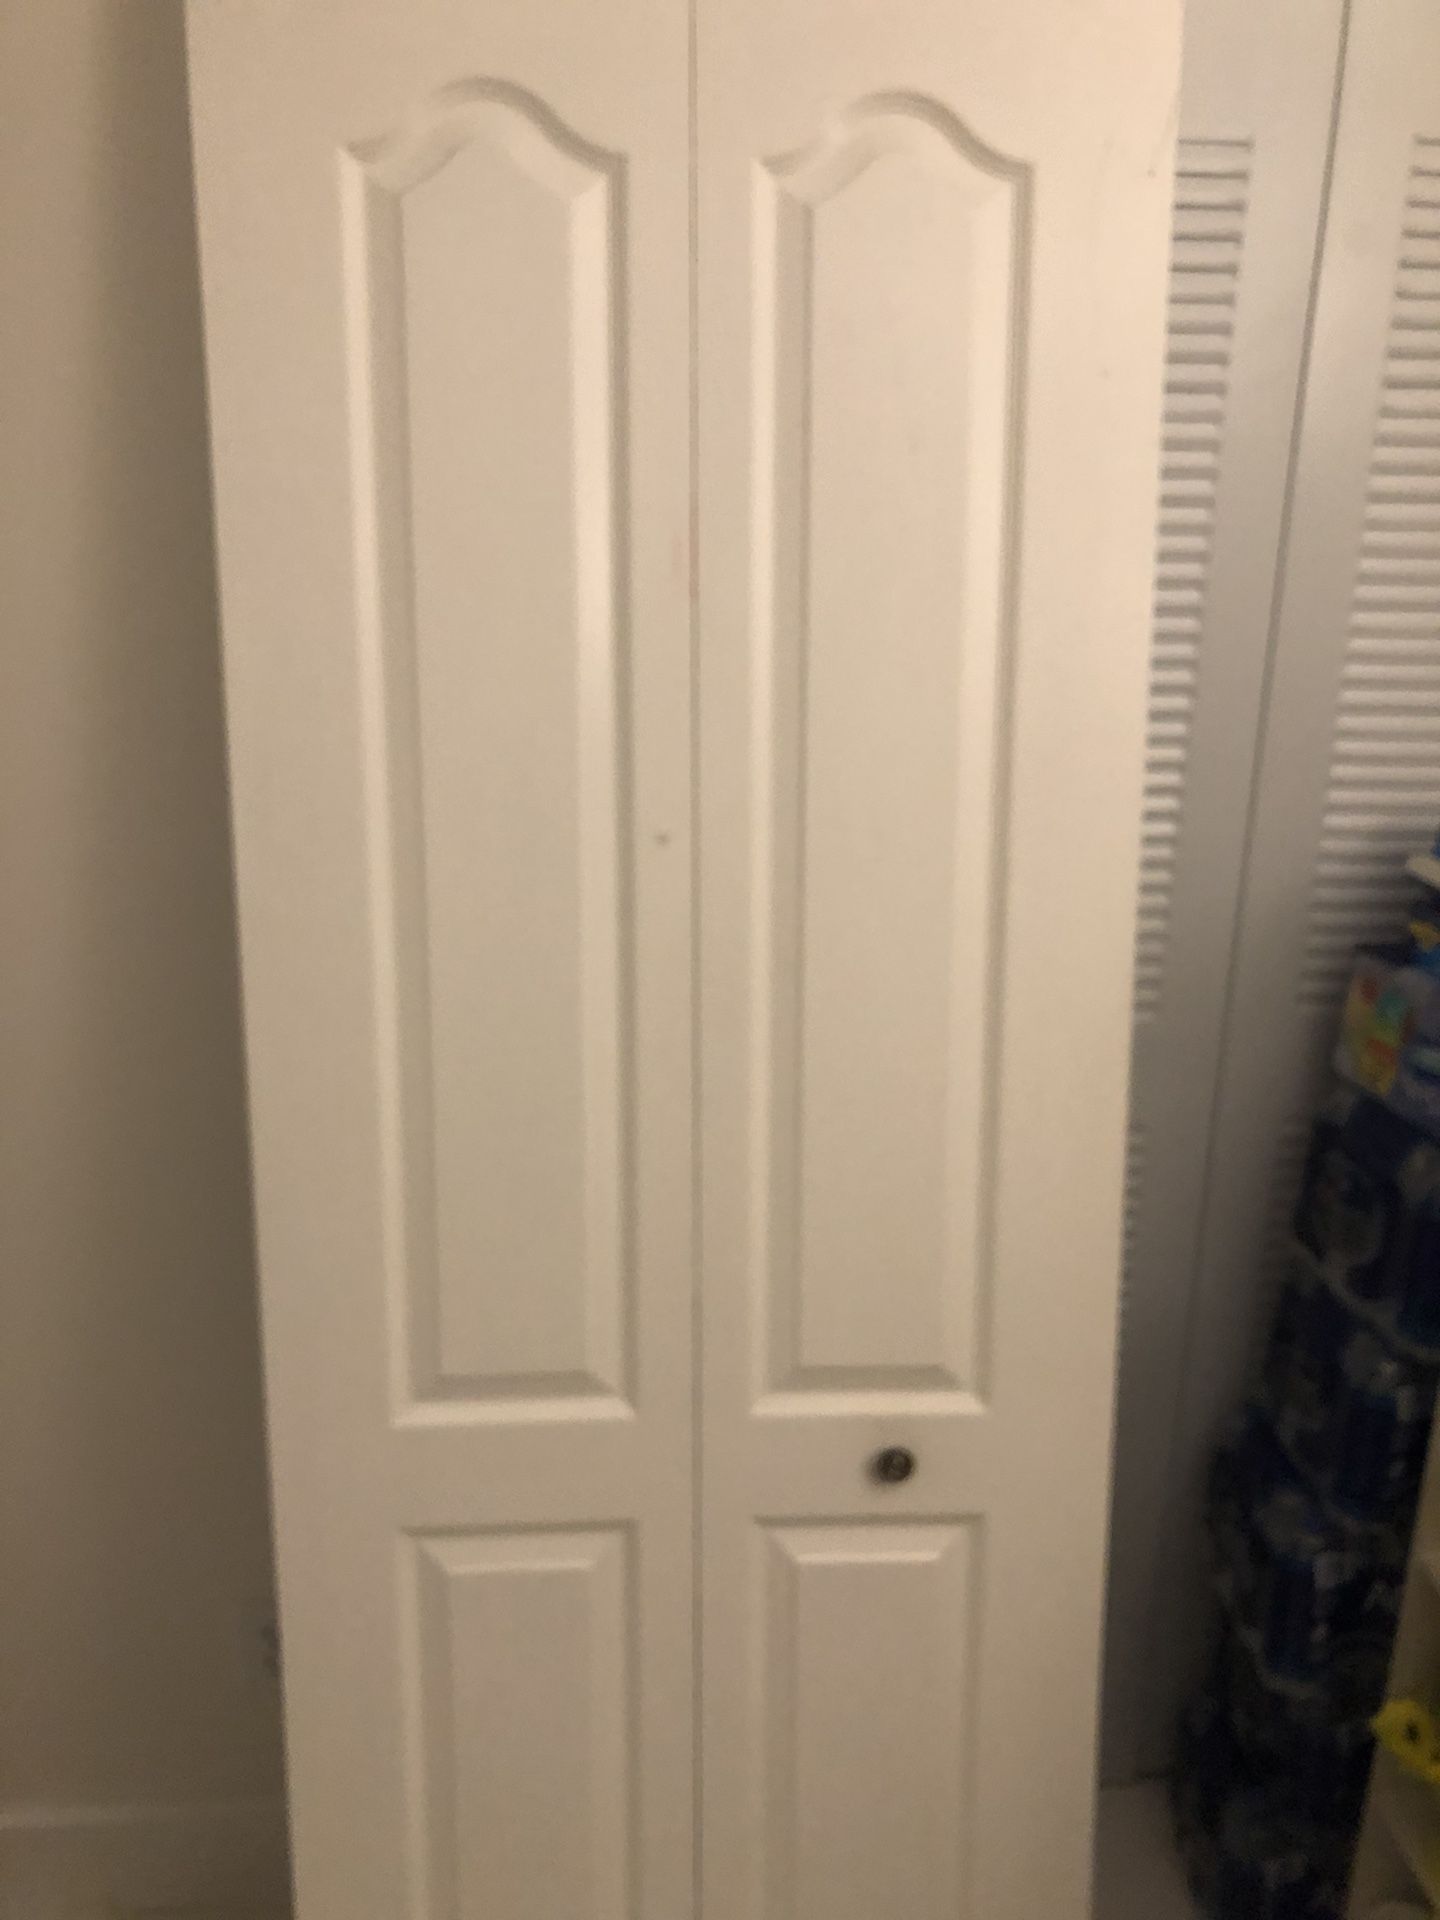 3 closet doors all 3 for $45